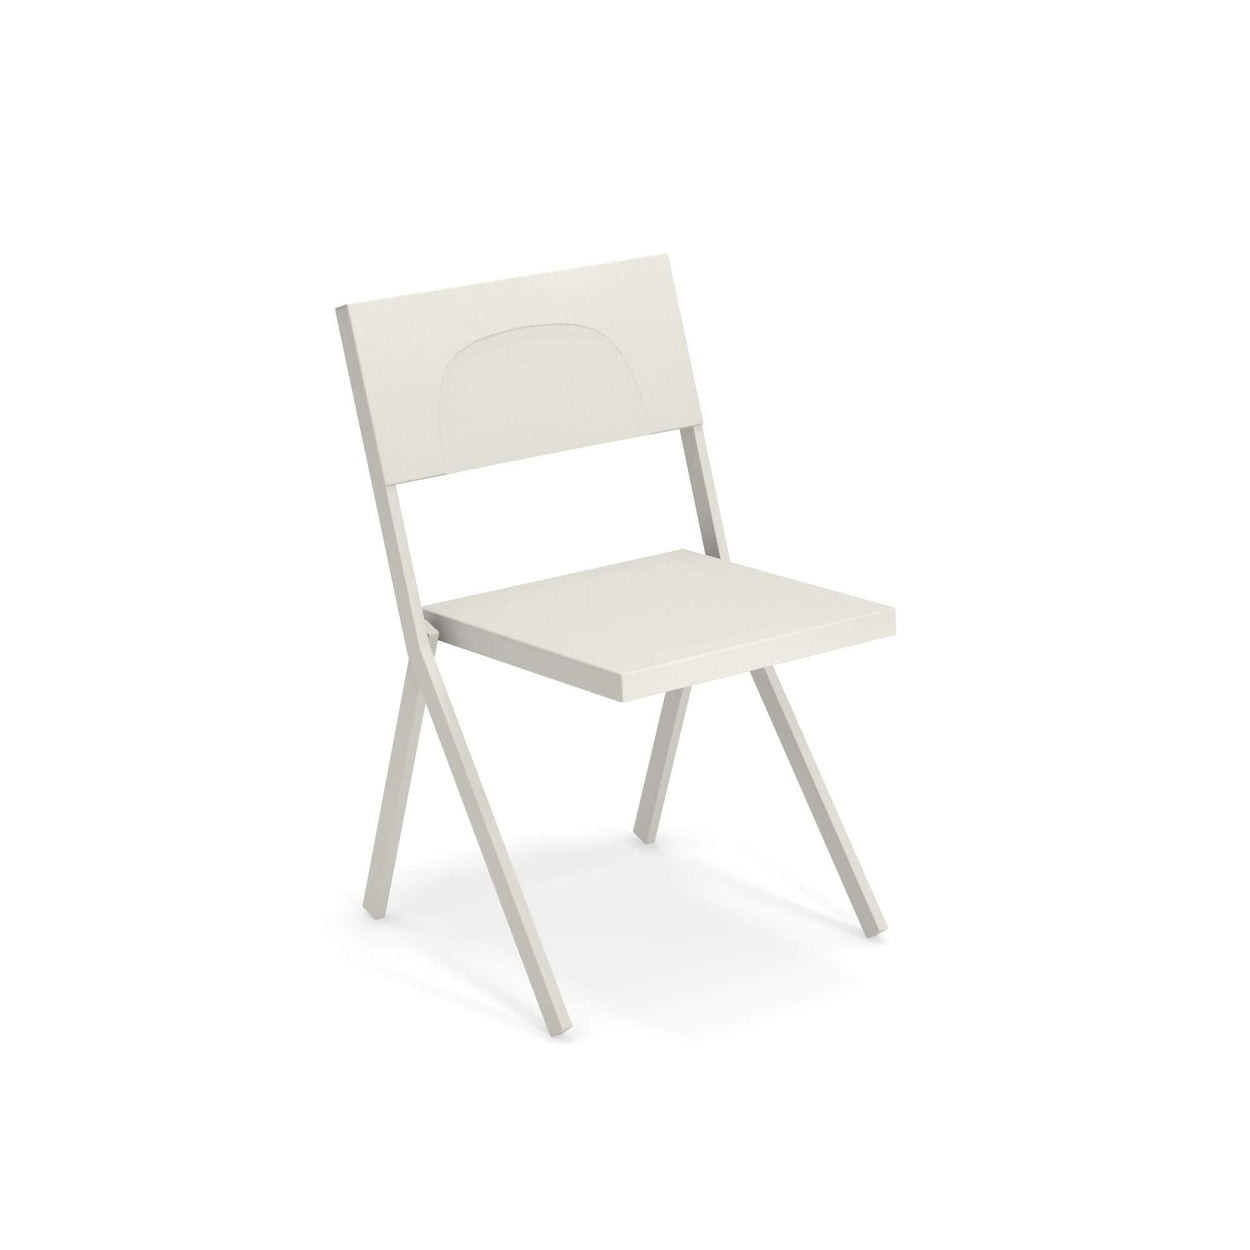 Mia chair / 2 stuks